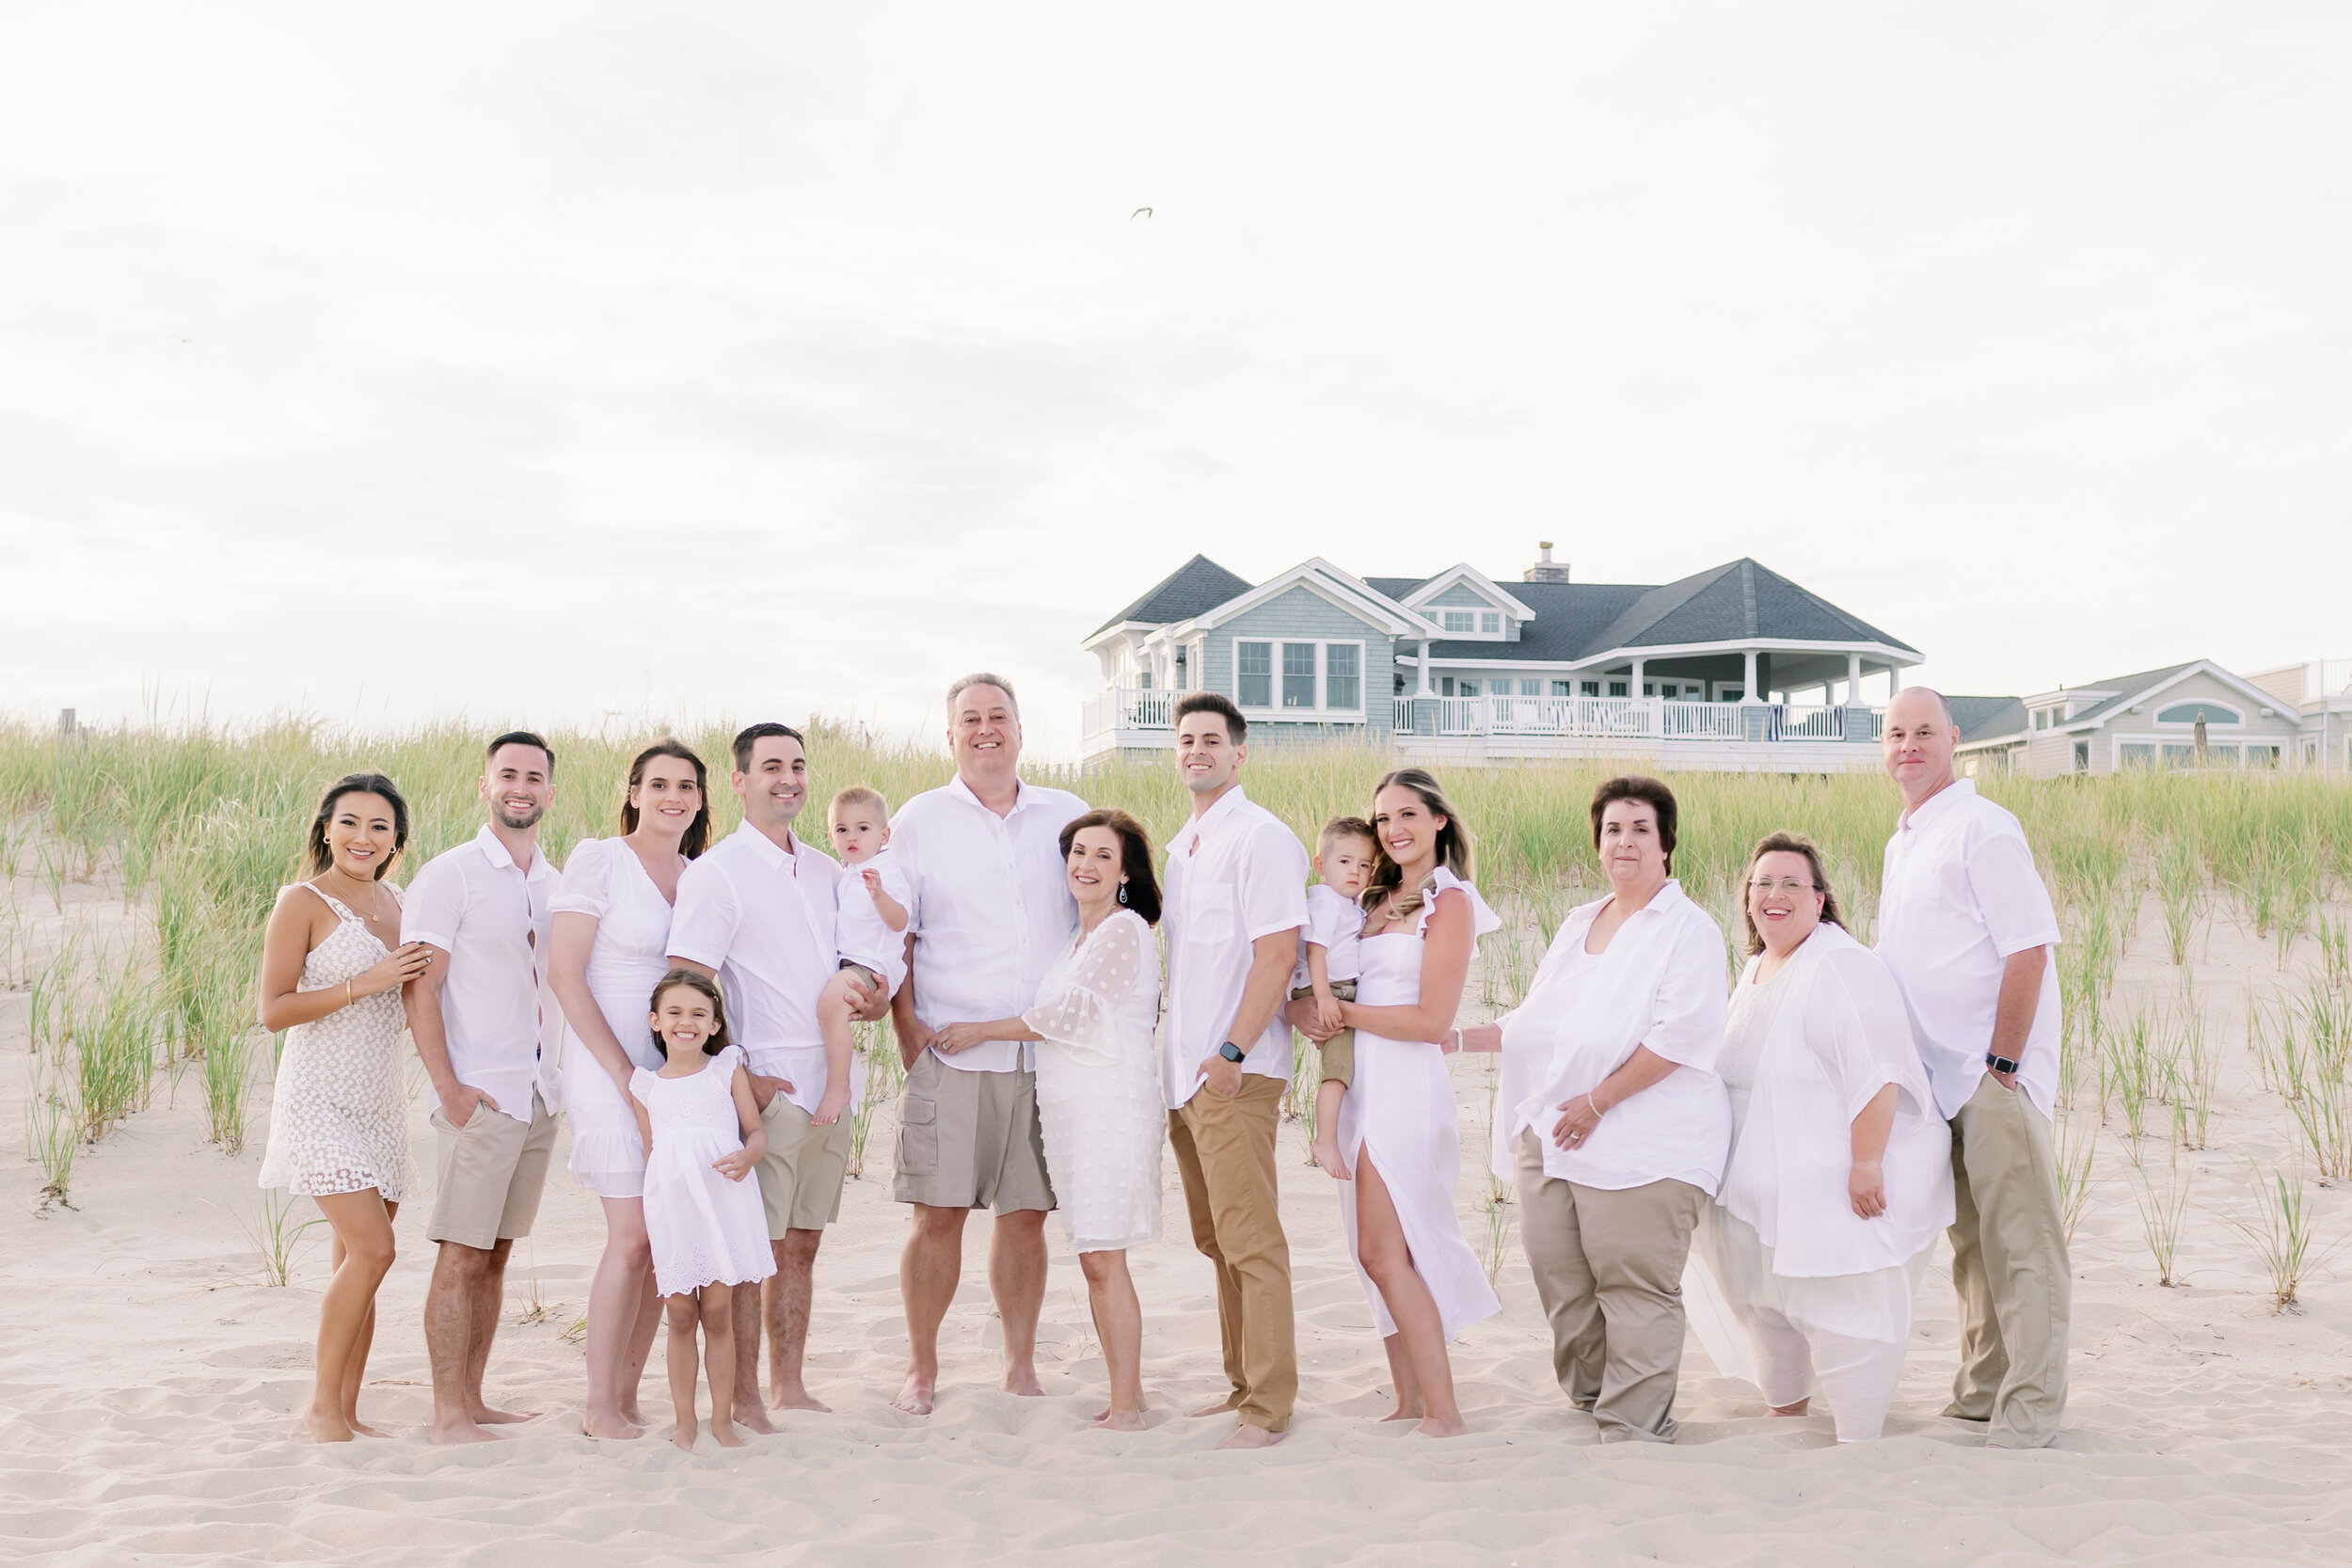 Beach photo ideas: extended family wearing white for family beach photos | NKB Photo